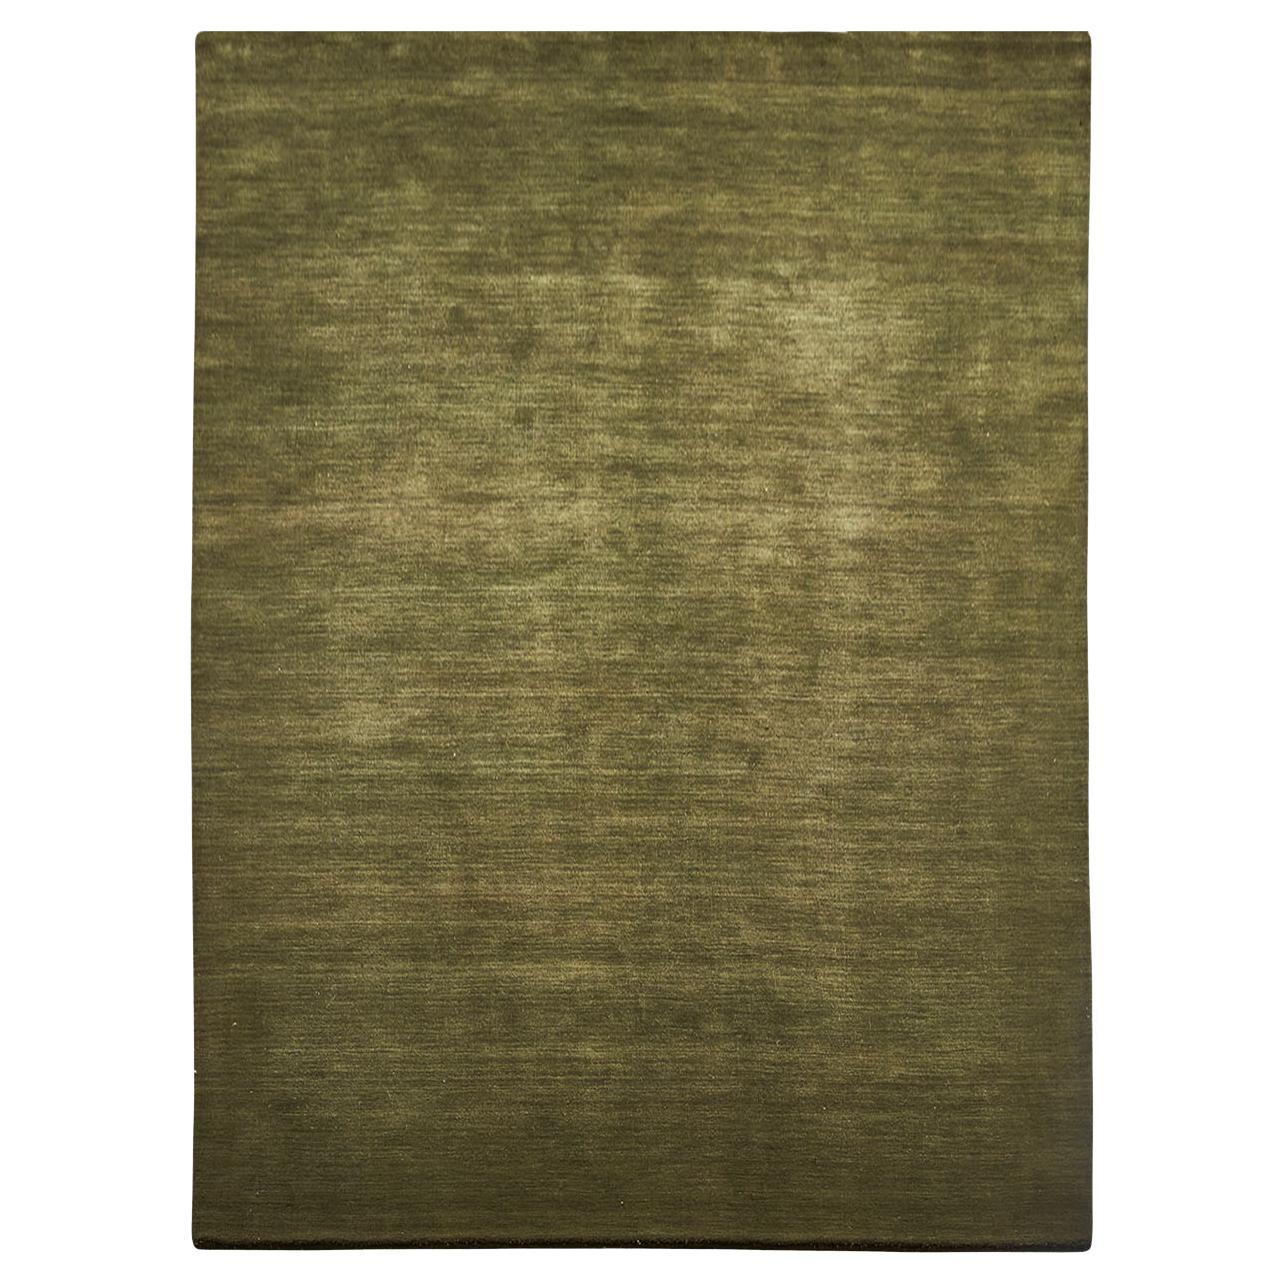 Moss Green Earth Carpet by Massimo Copenhagen